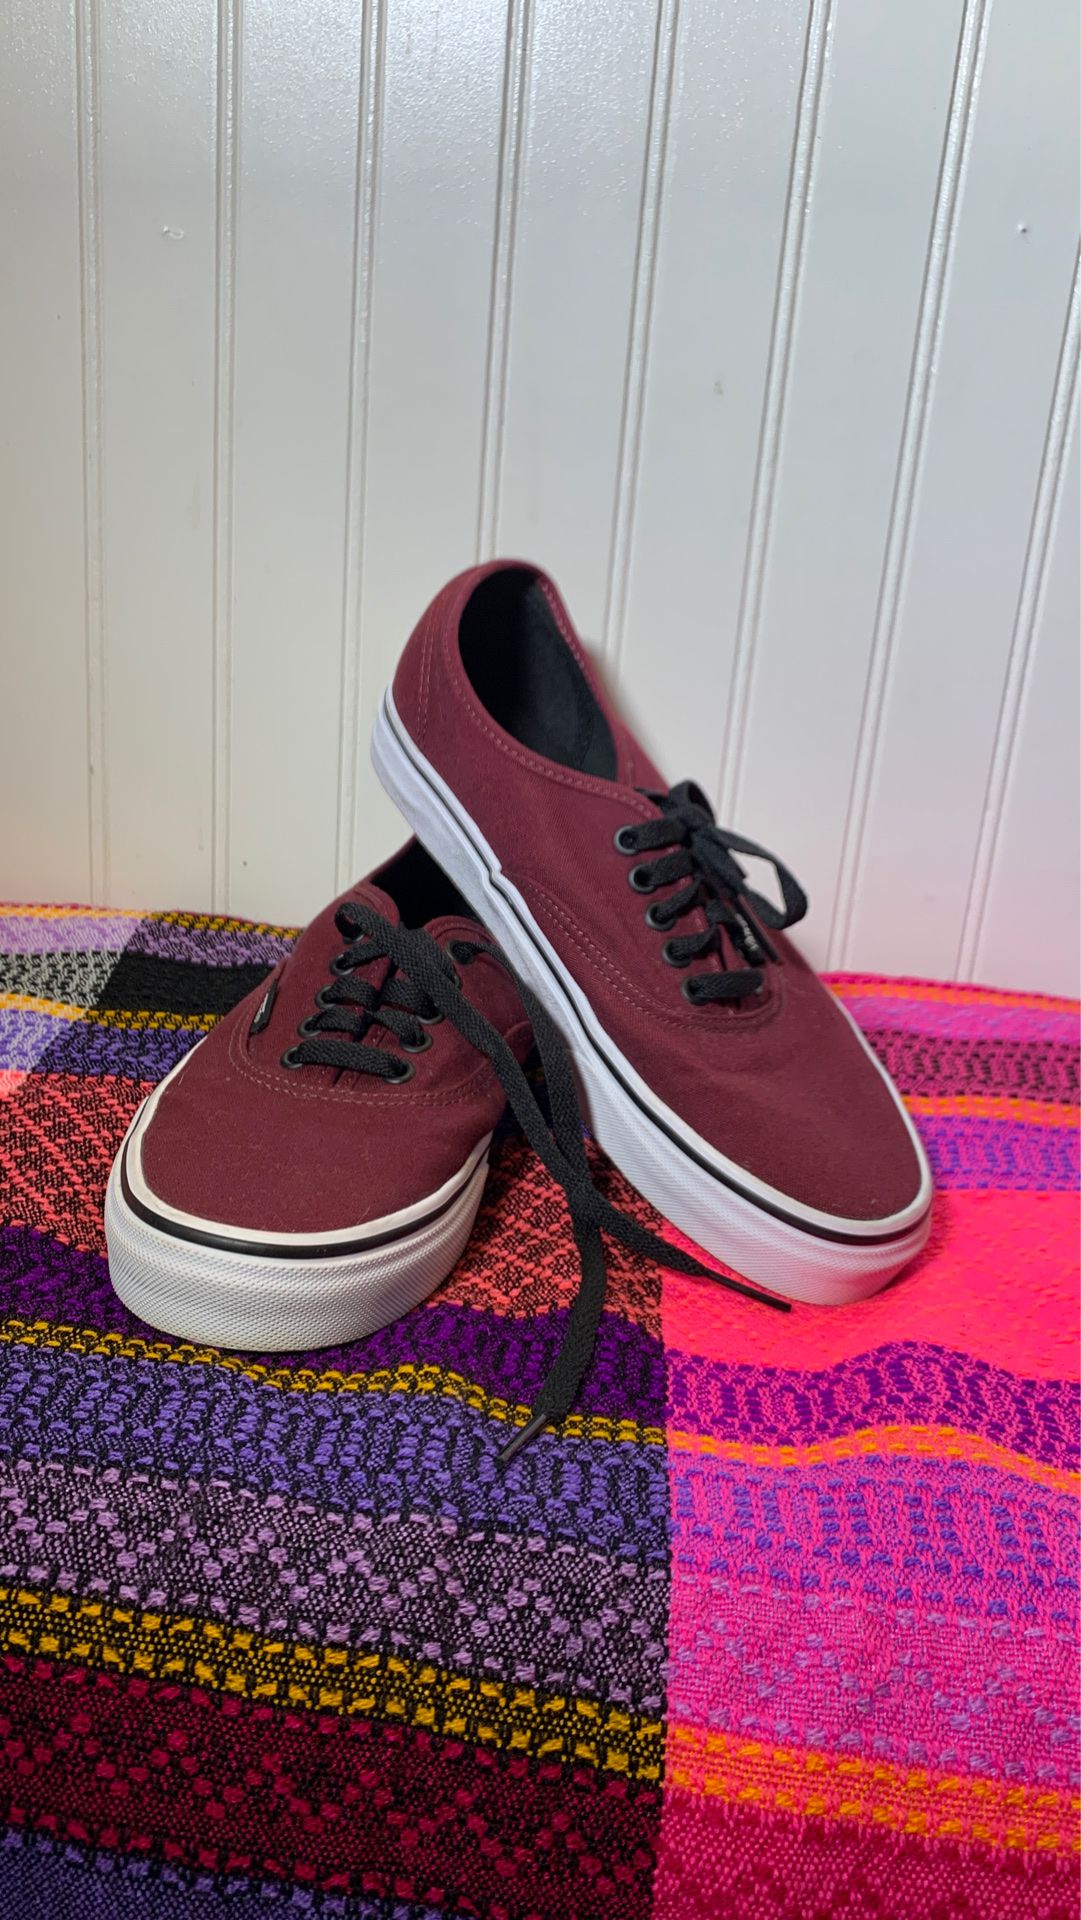 Vans “ERA” maroon shoes